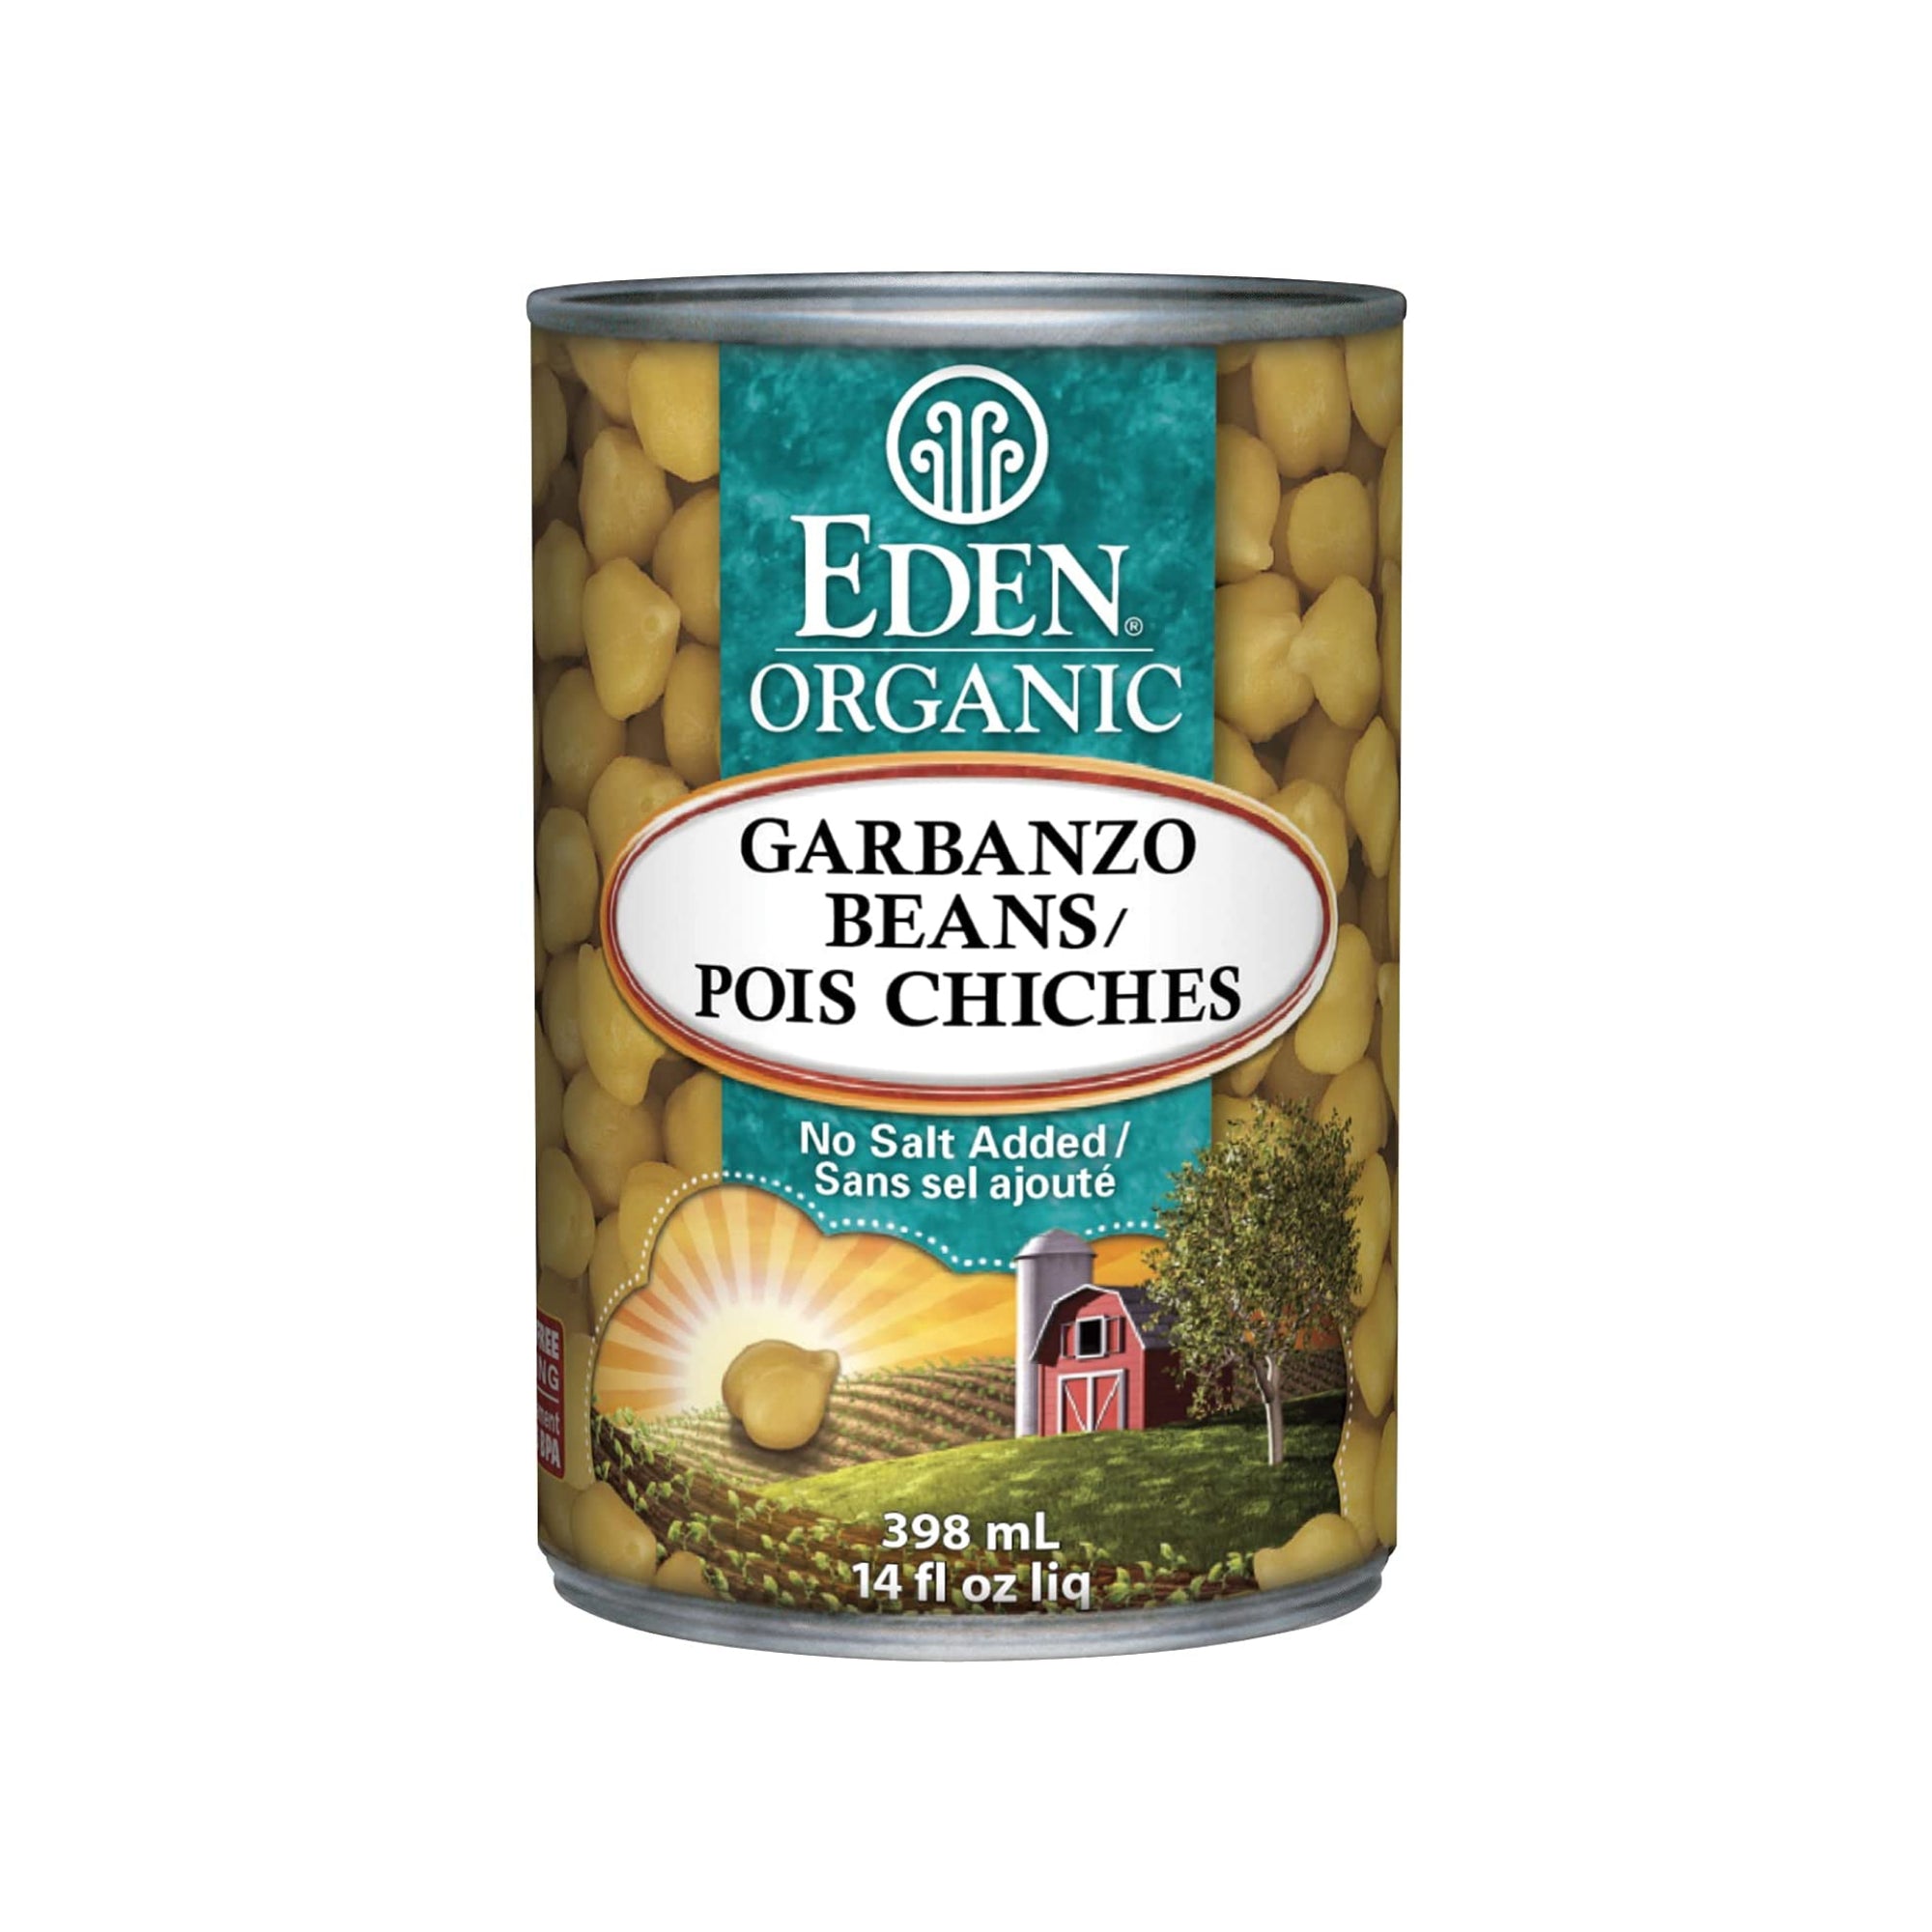 Eden Organic Garbanzo Beans 398ml